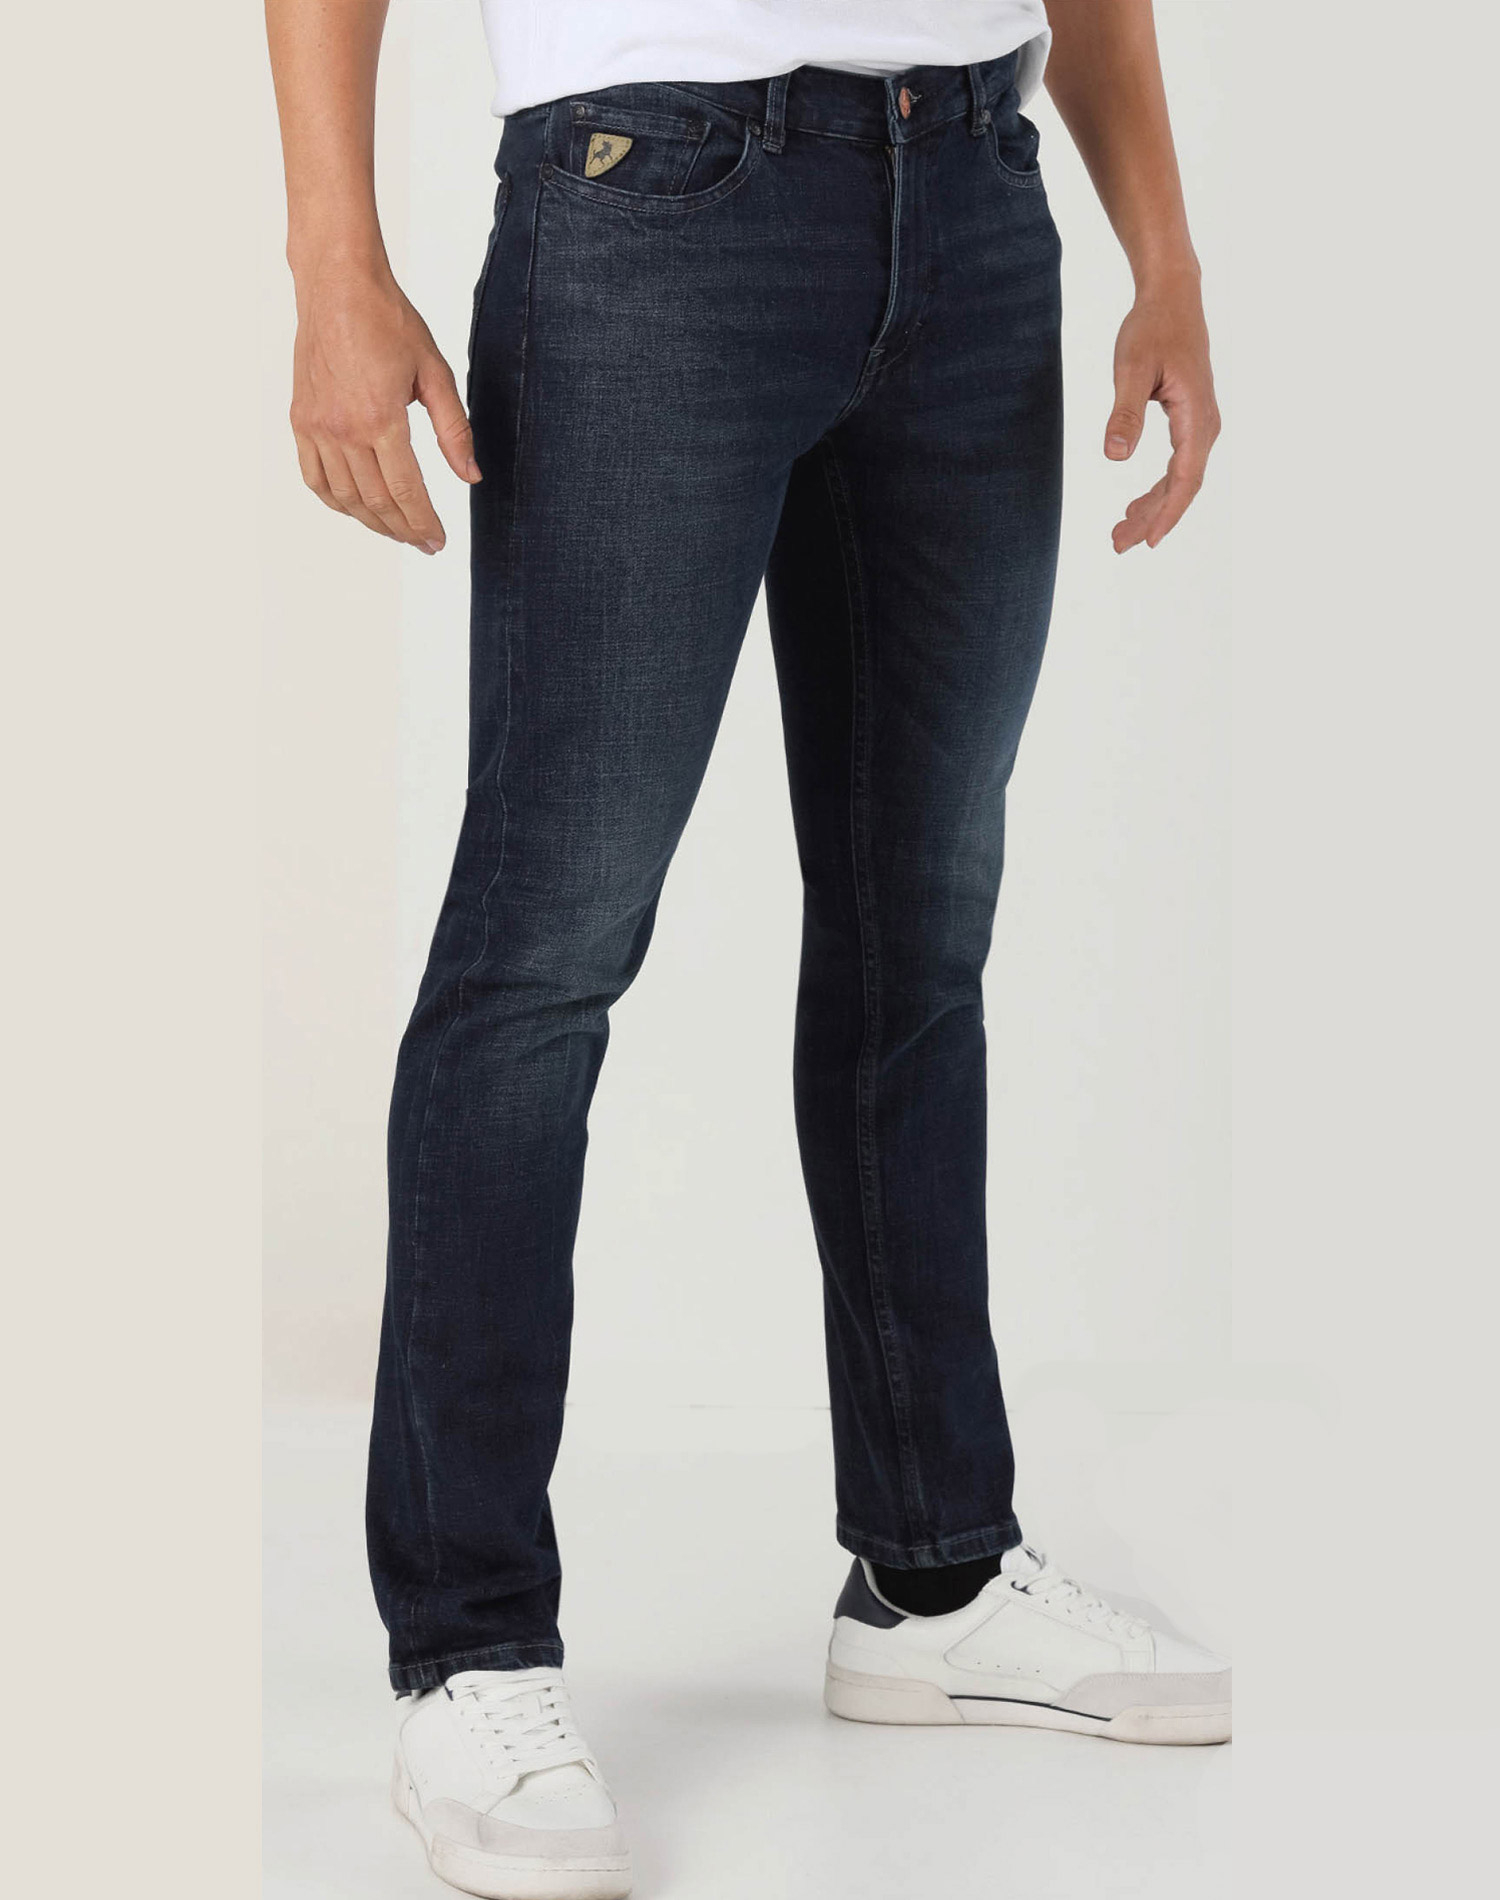 Lois pantalons texans d'home Robin comfort slim 10191/975 blau negrós